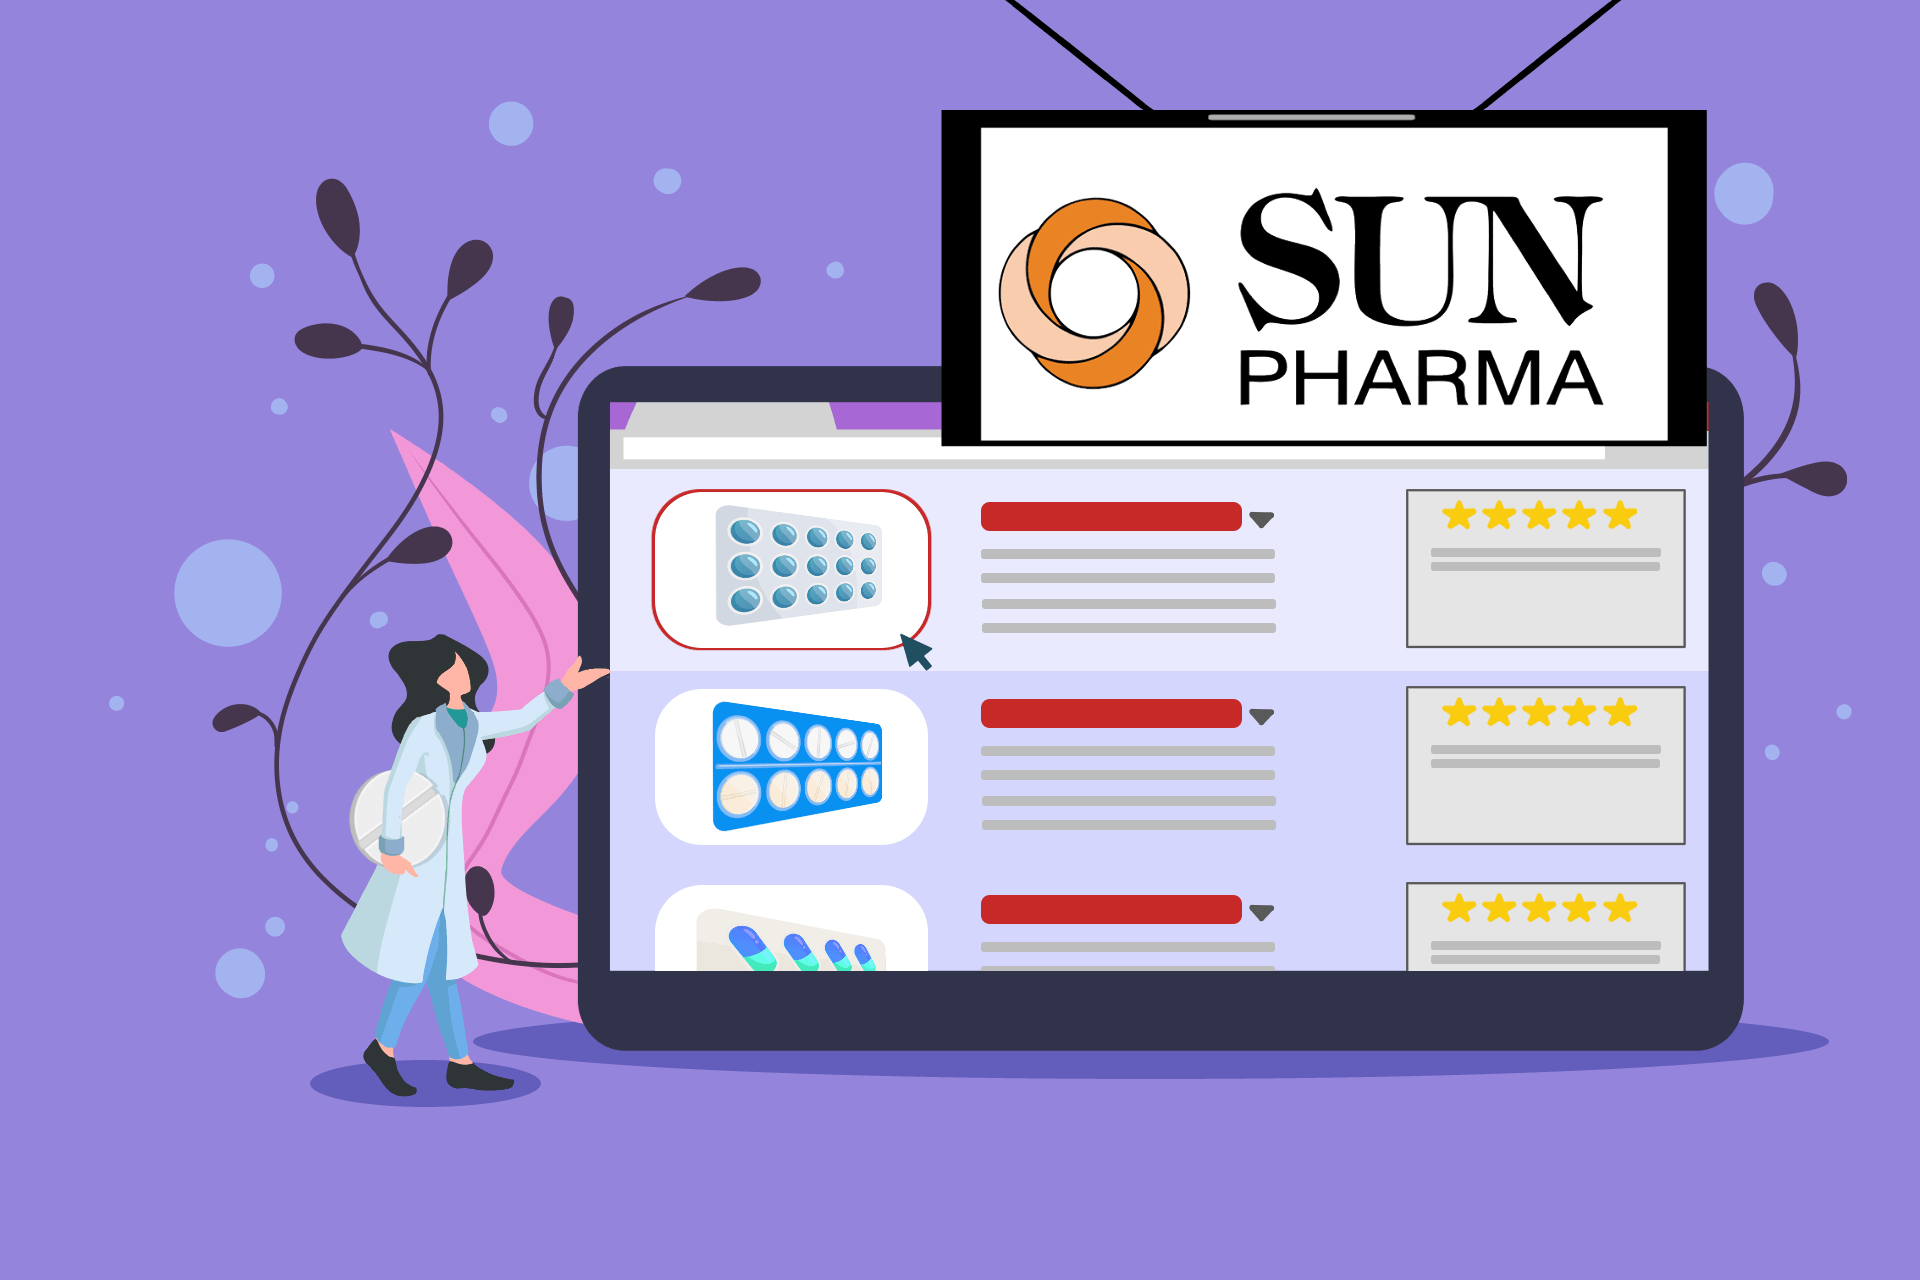 Sun Pharma Company Review